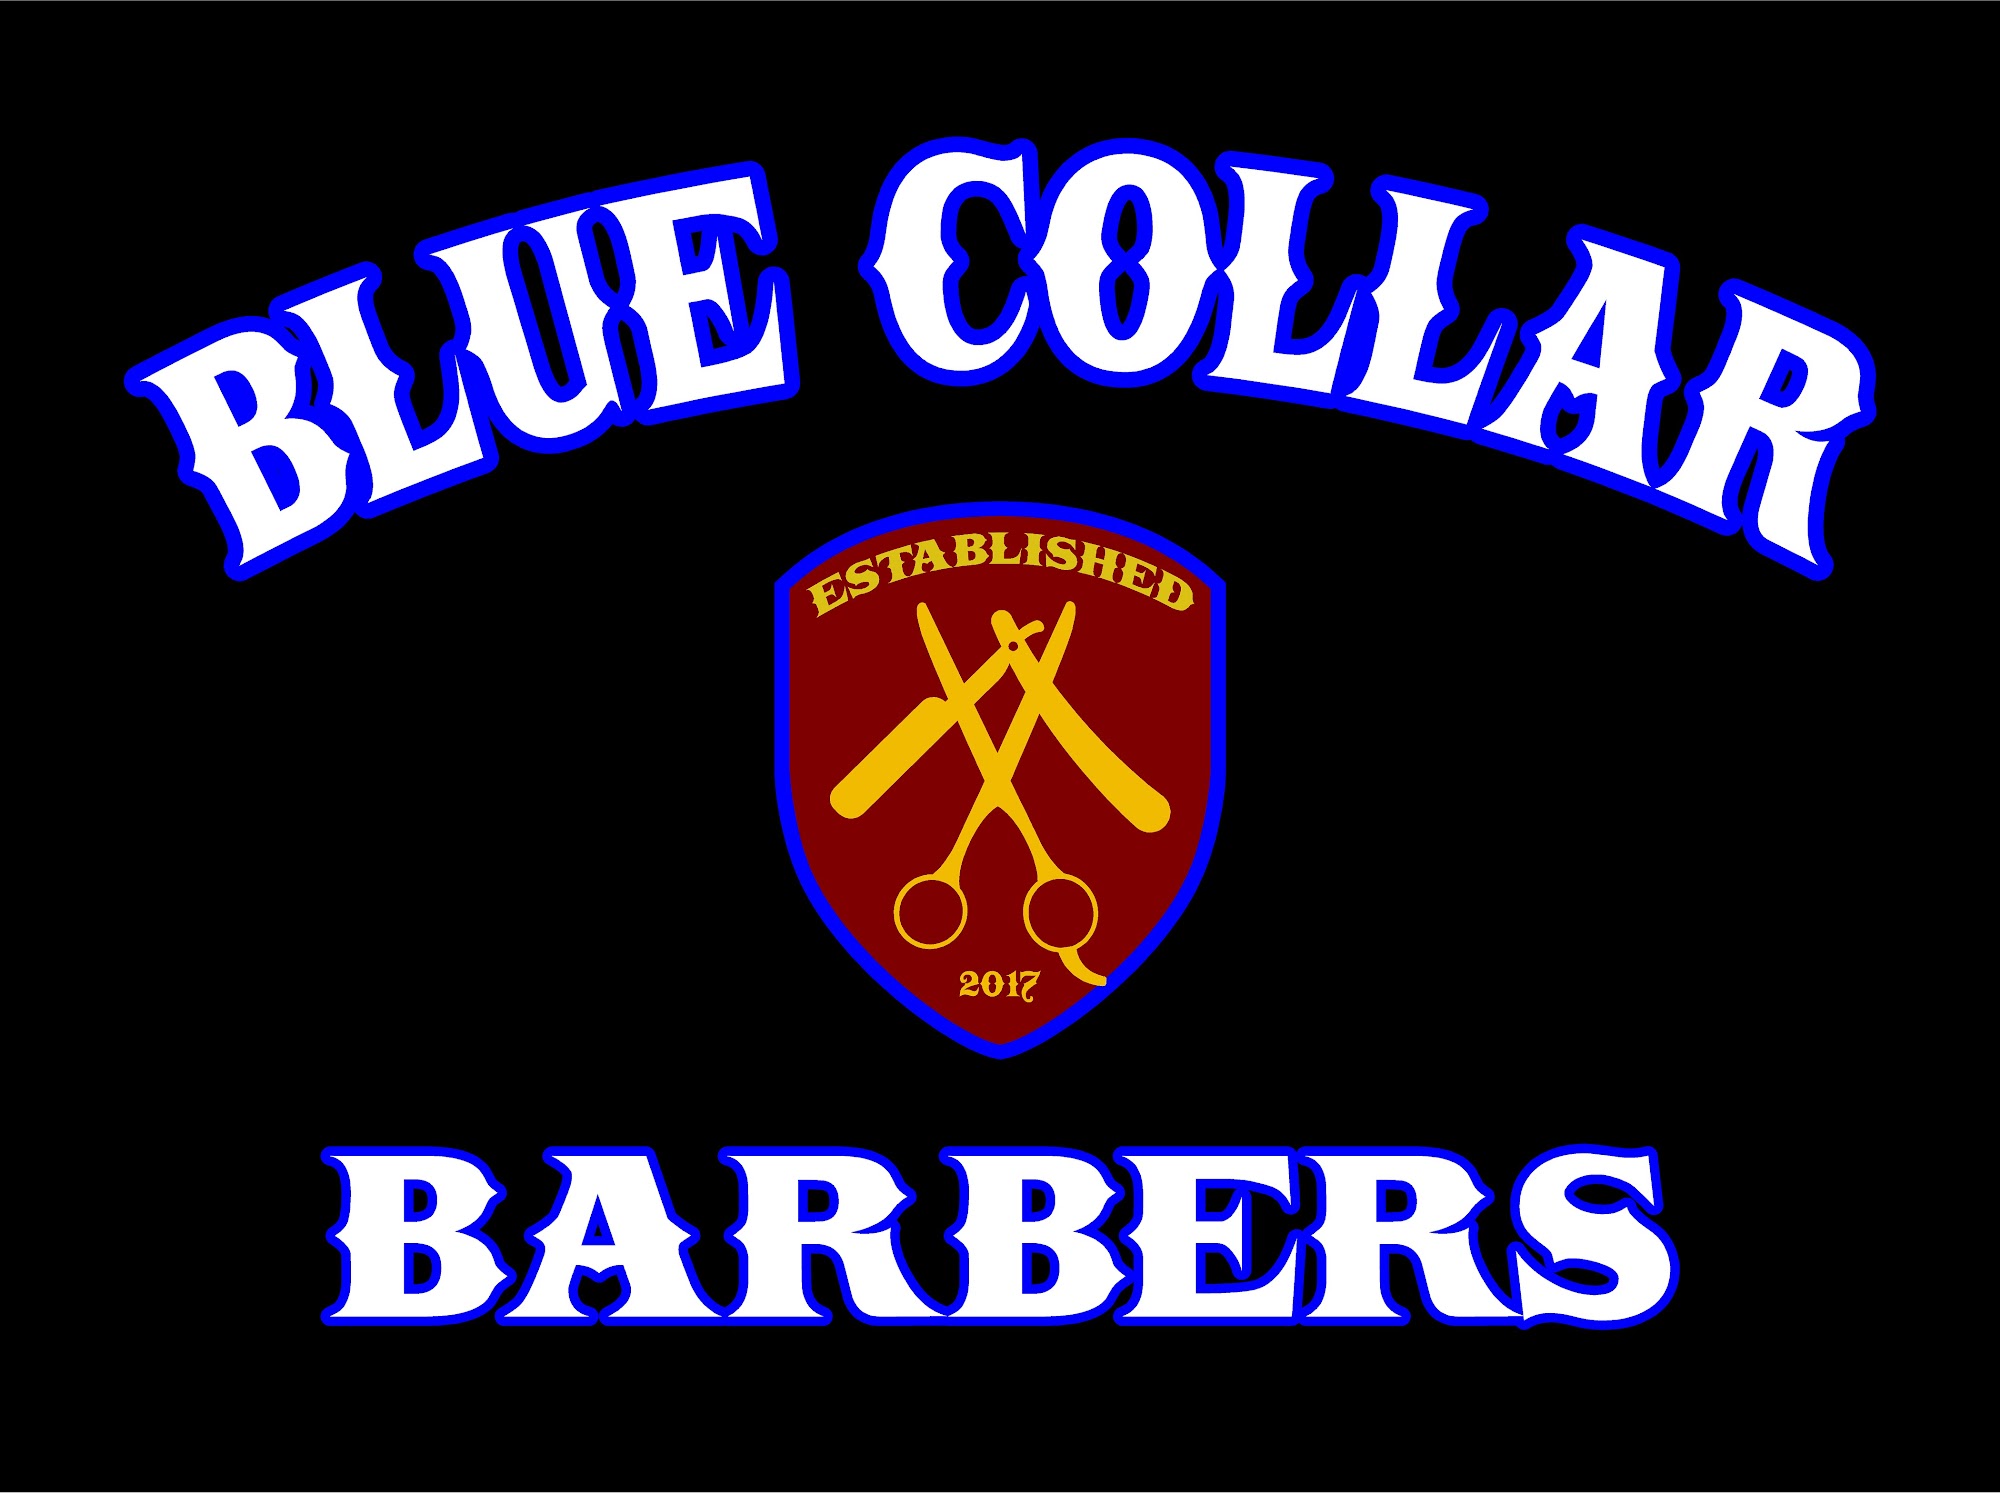 Blue Collar Barbers 457 Main St, Farmington New Hampshire 03835